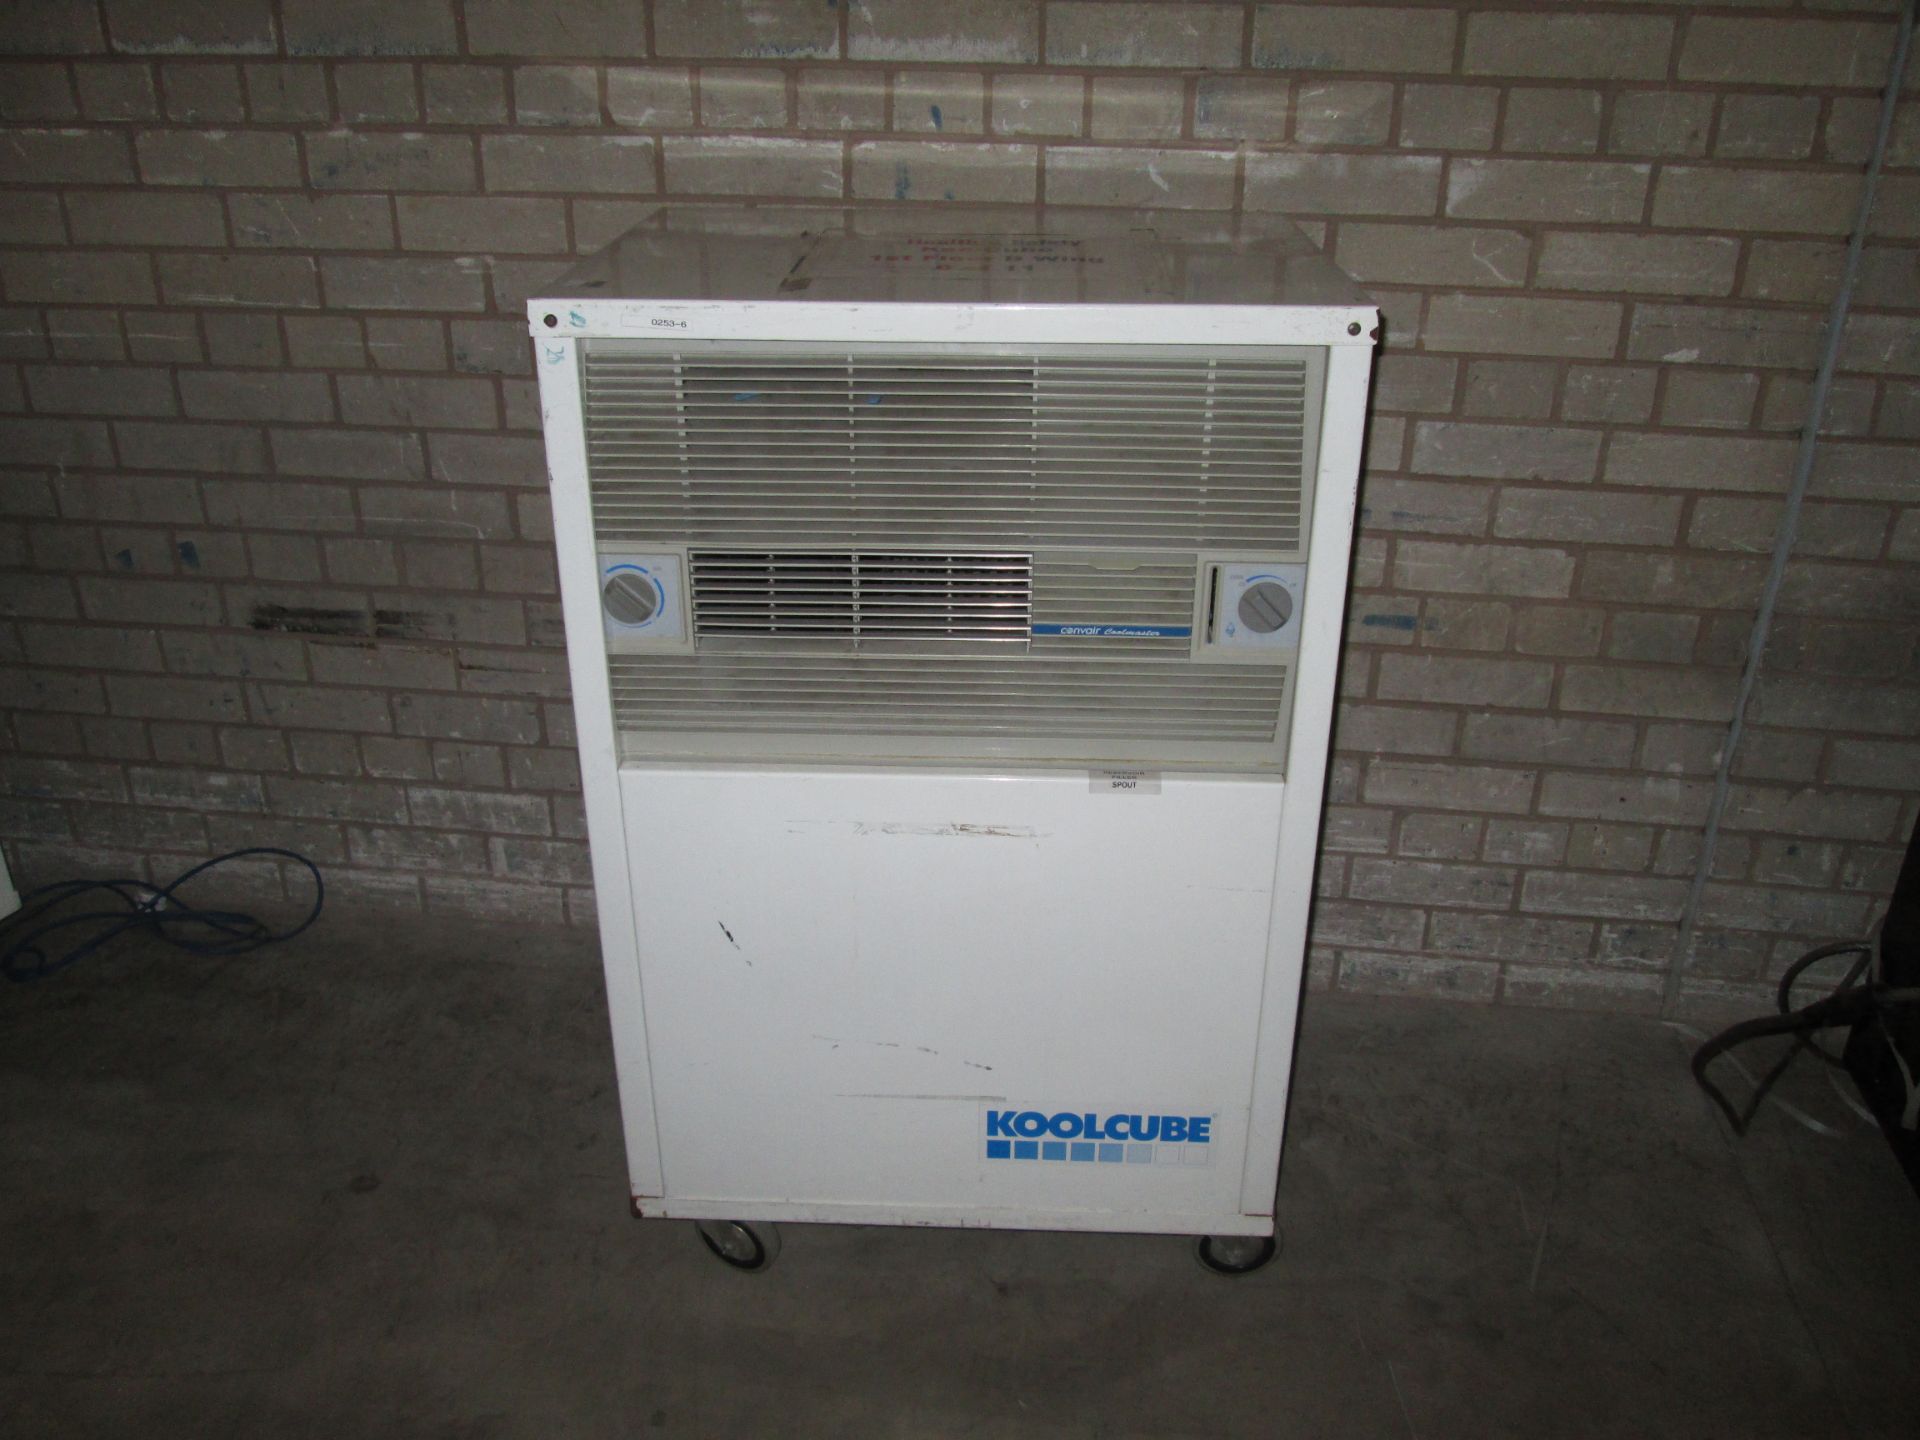 Koolcube M3000C air-conditioning unit, s/n KC-31801